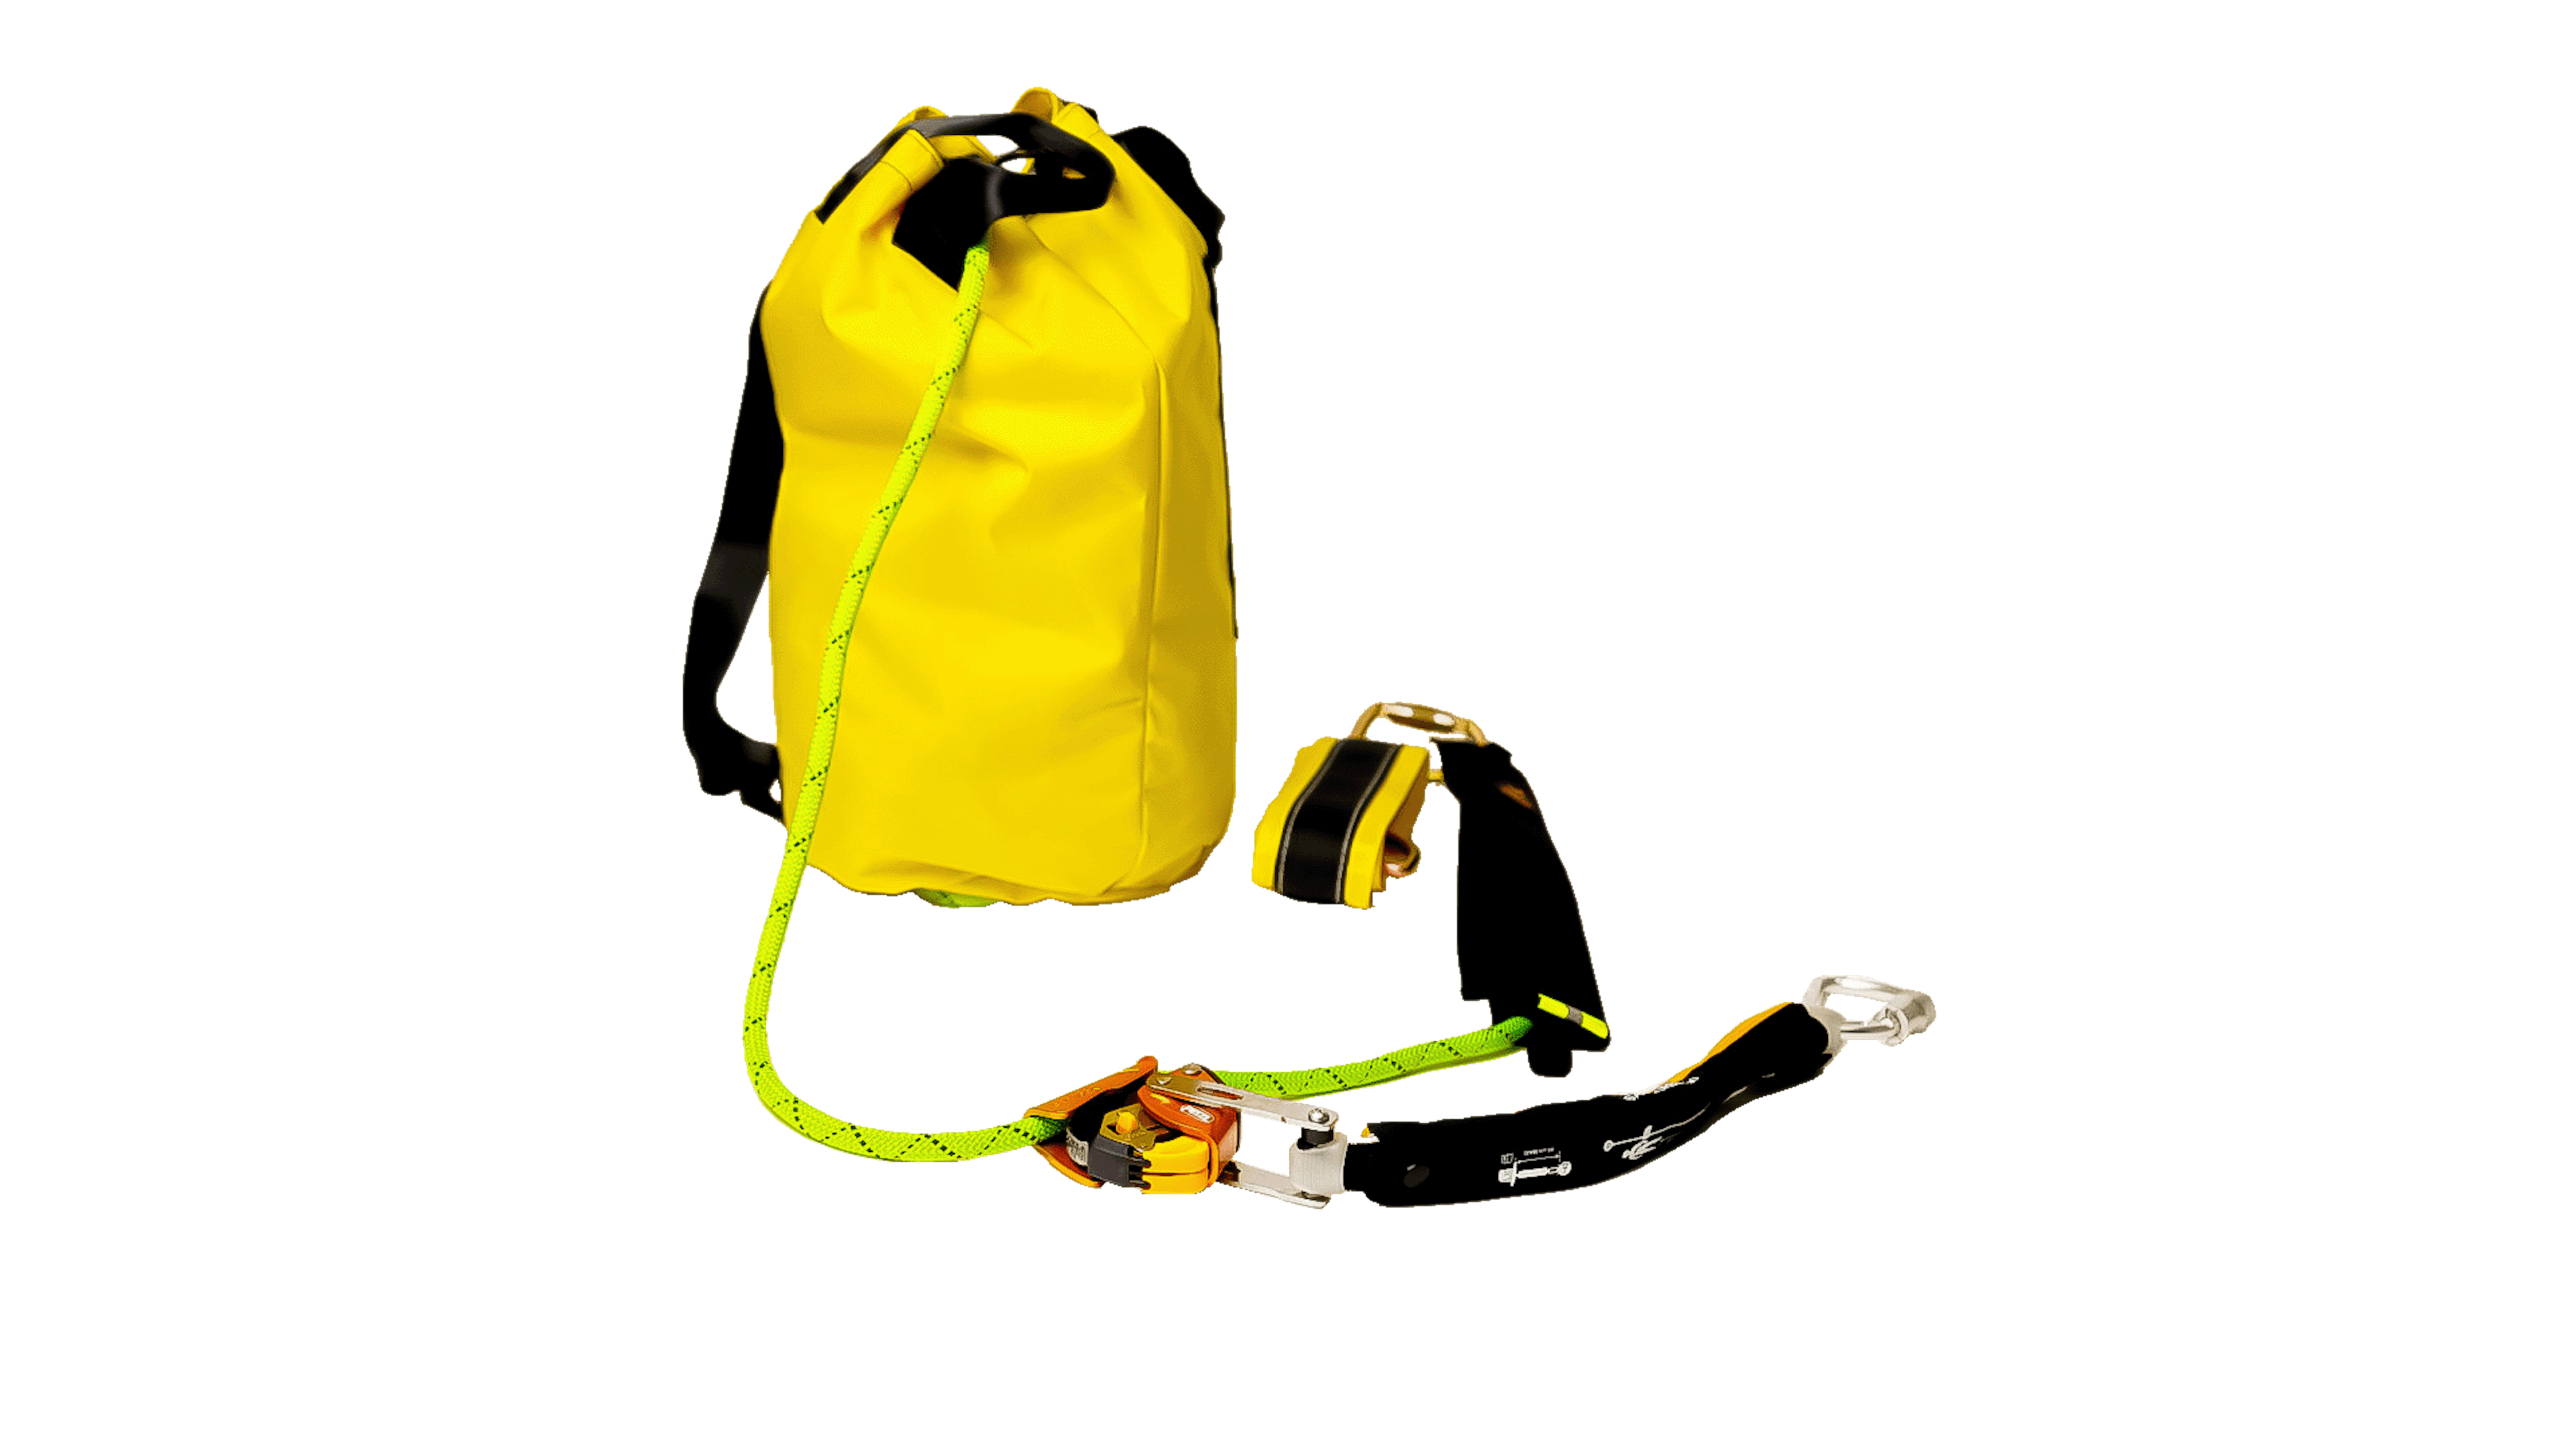 deployed lifeline kit bag